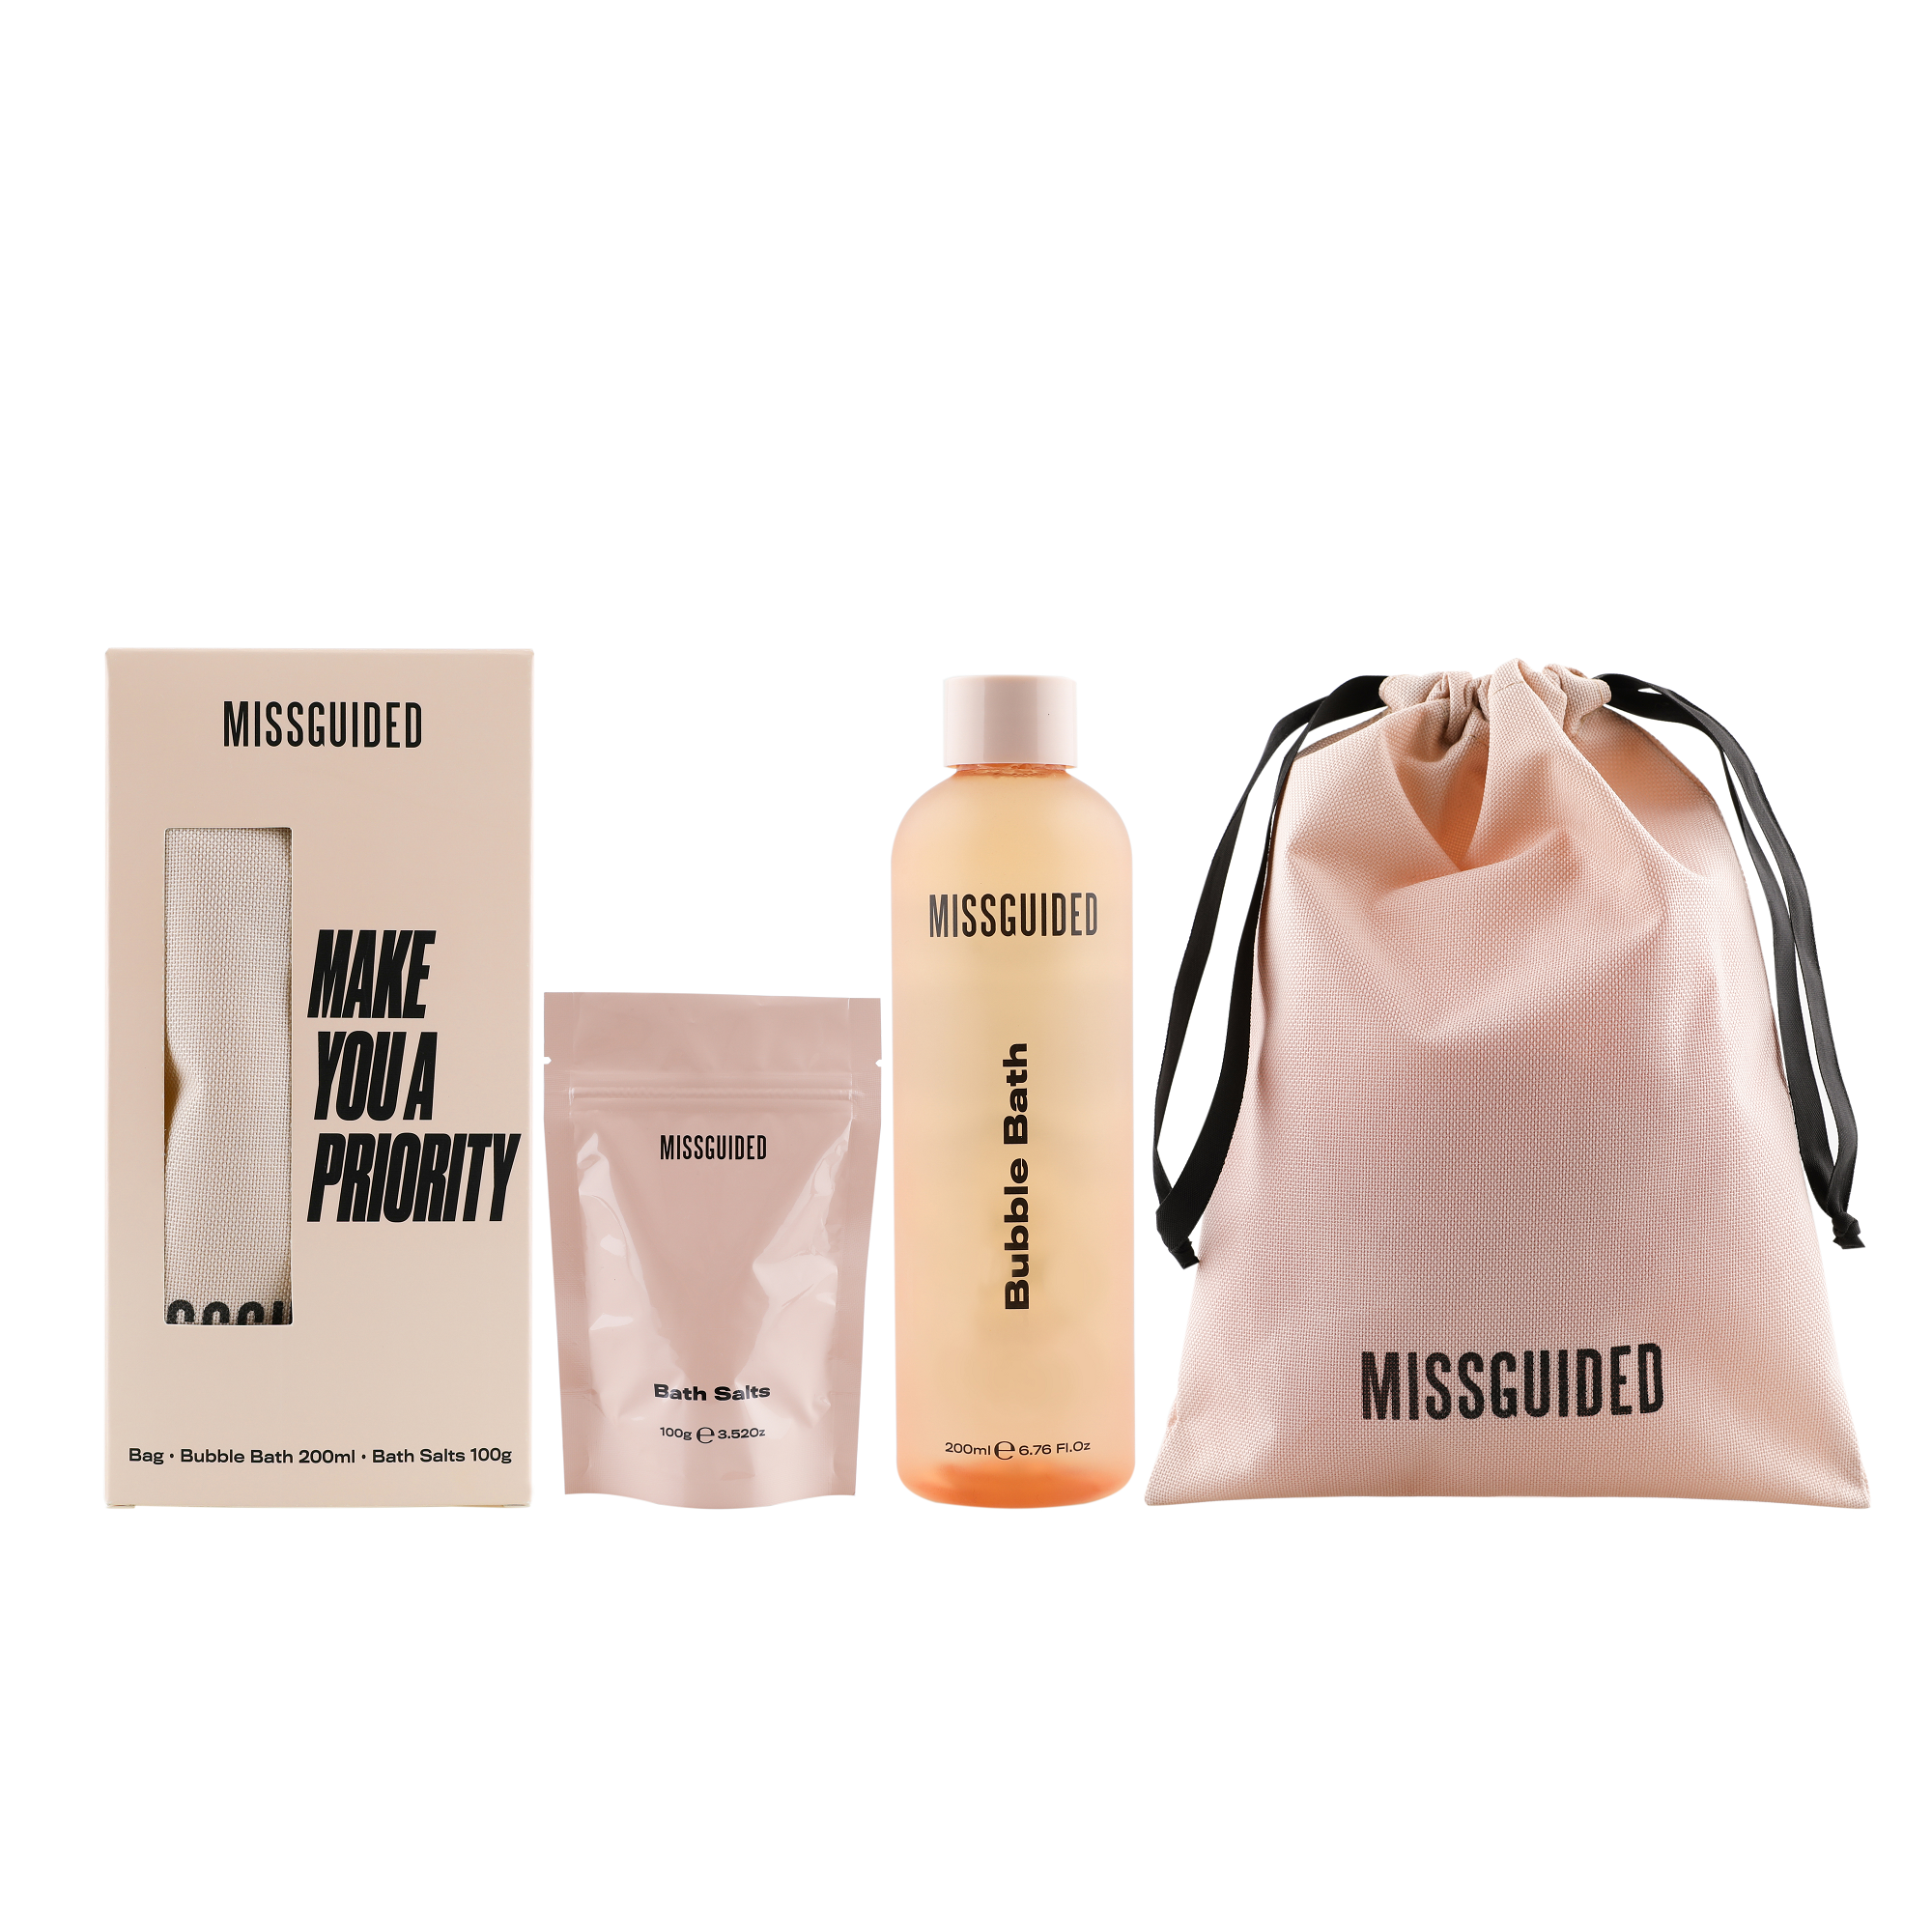 Missguided Make You A Priority Bath Gift Set (Bubble Bath 200ml + Bath Salts 100g + Drawstring Bag)